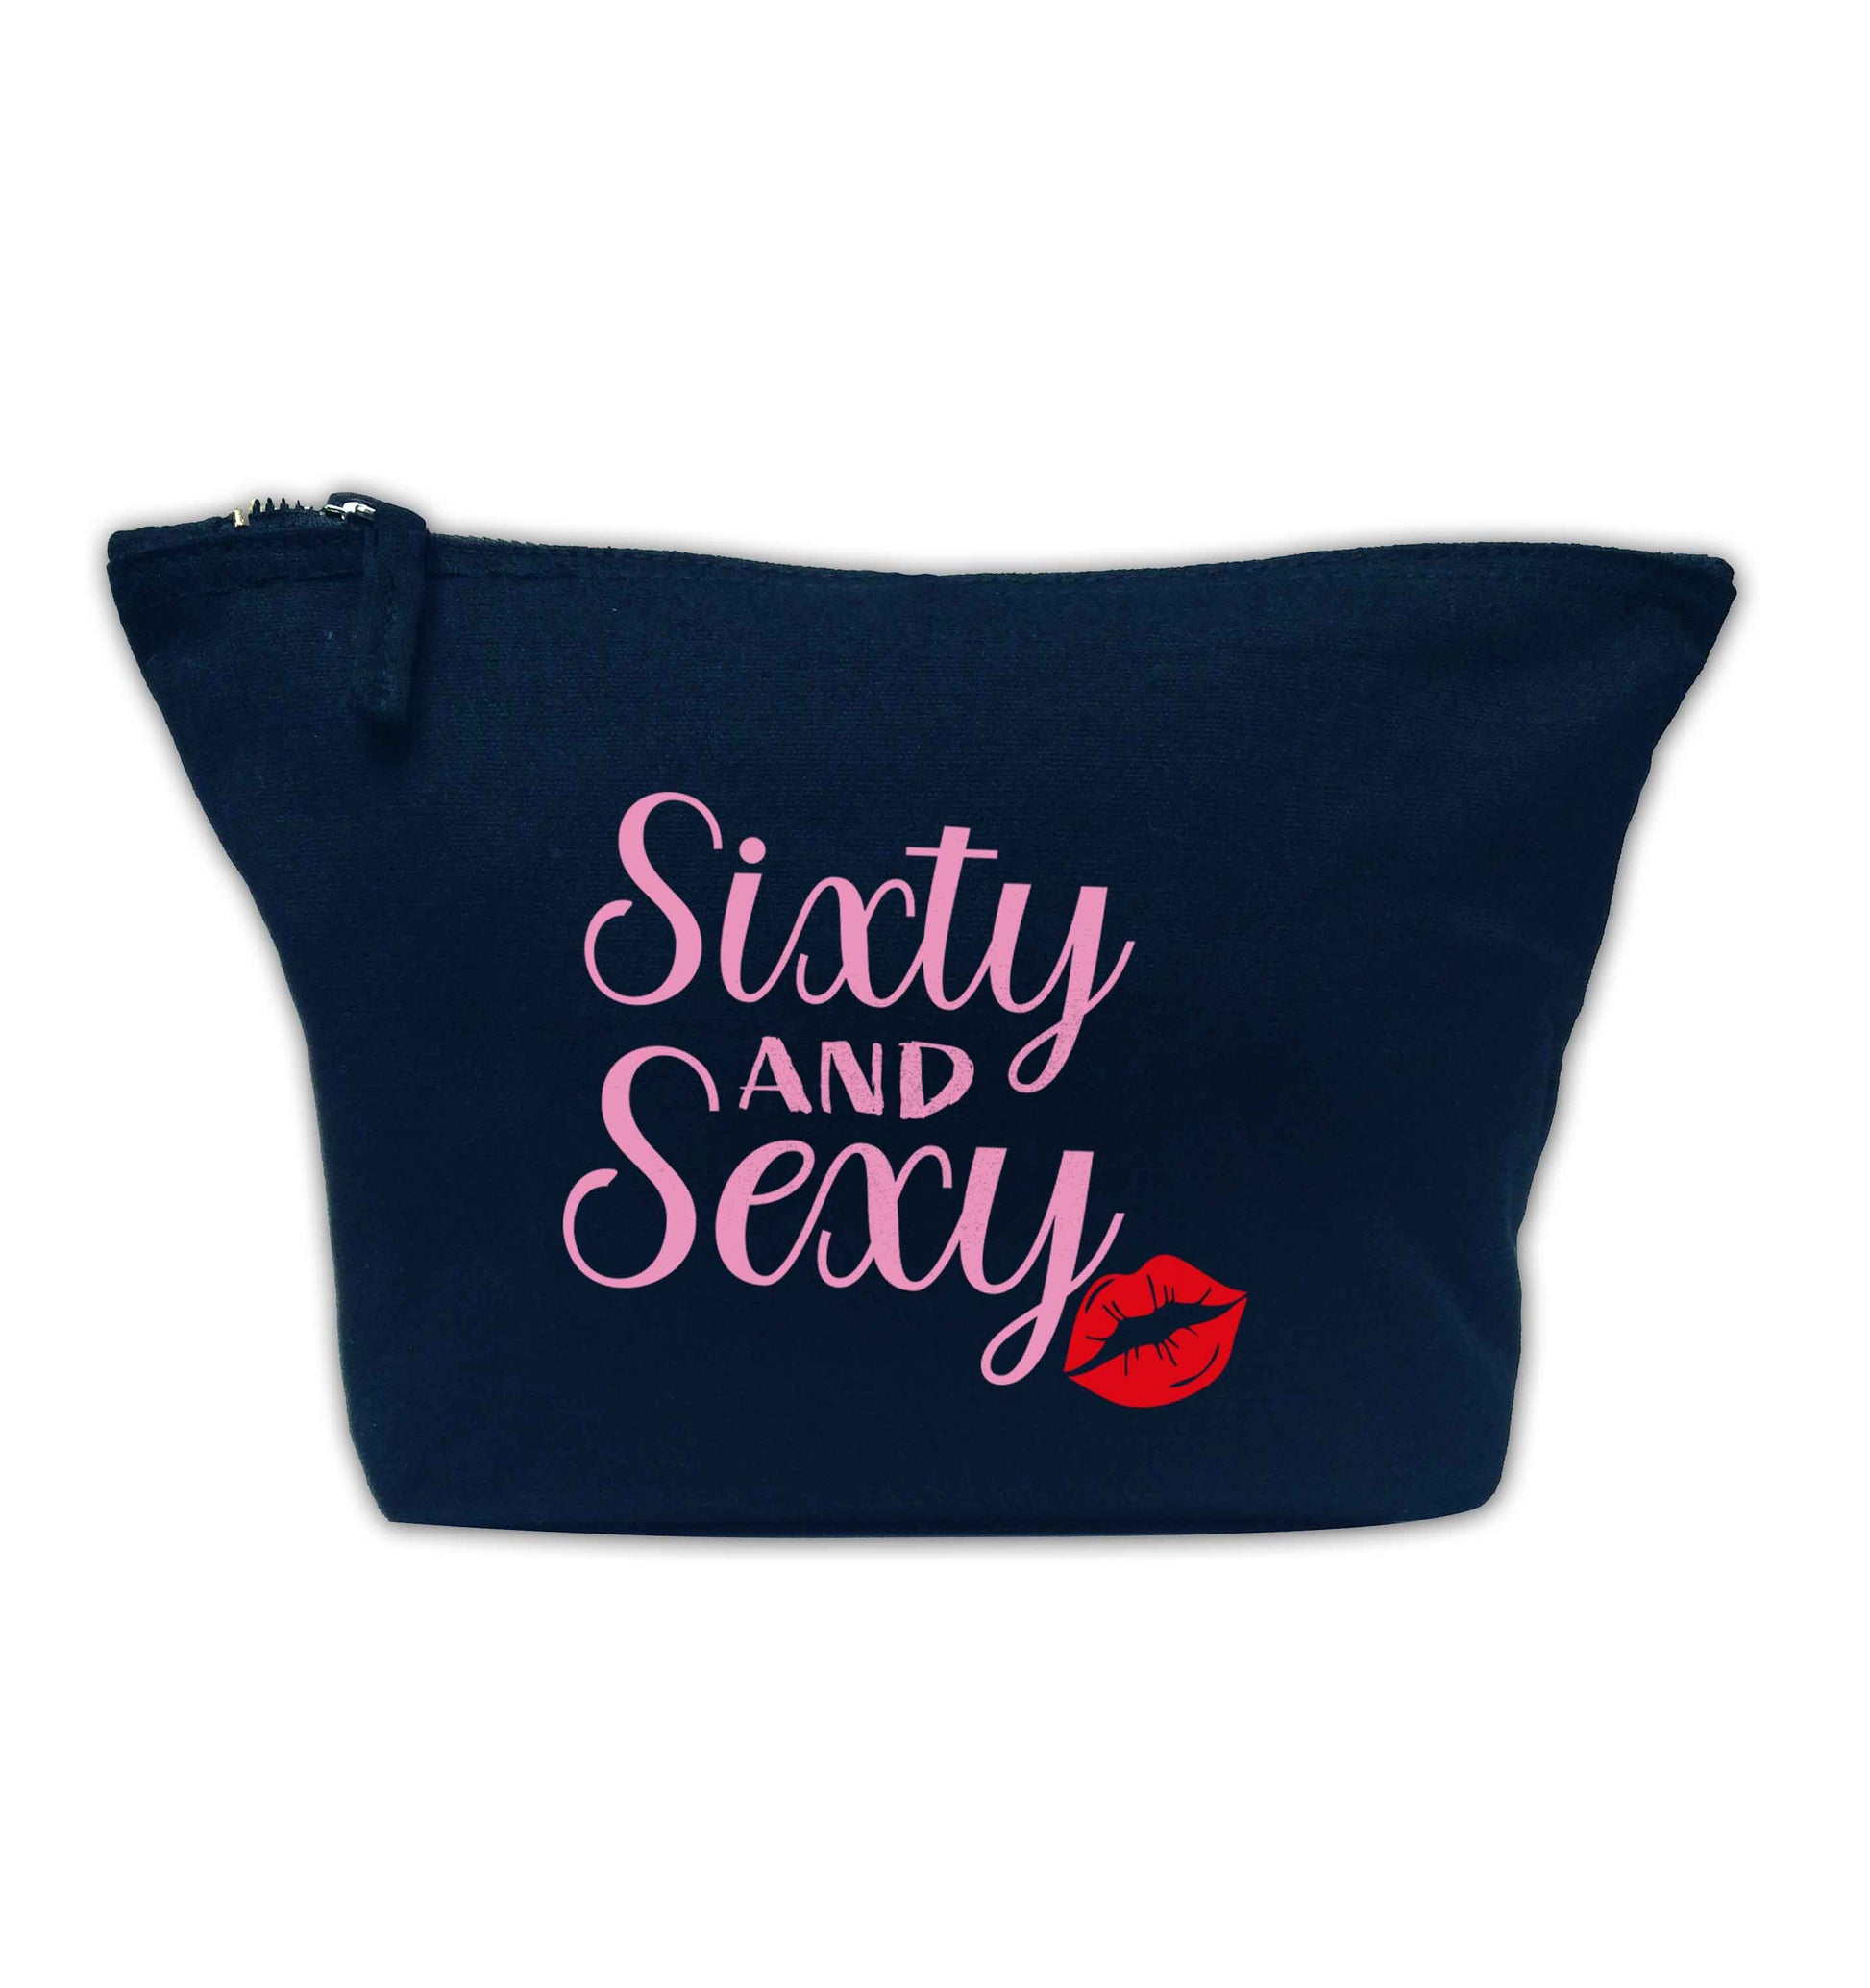 Sixty and sexy navy makeup bag